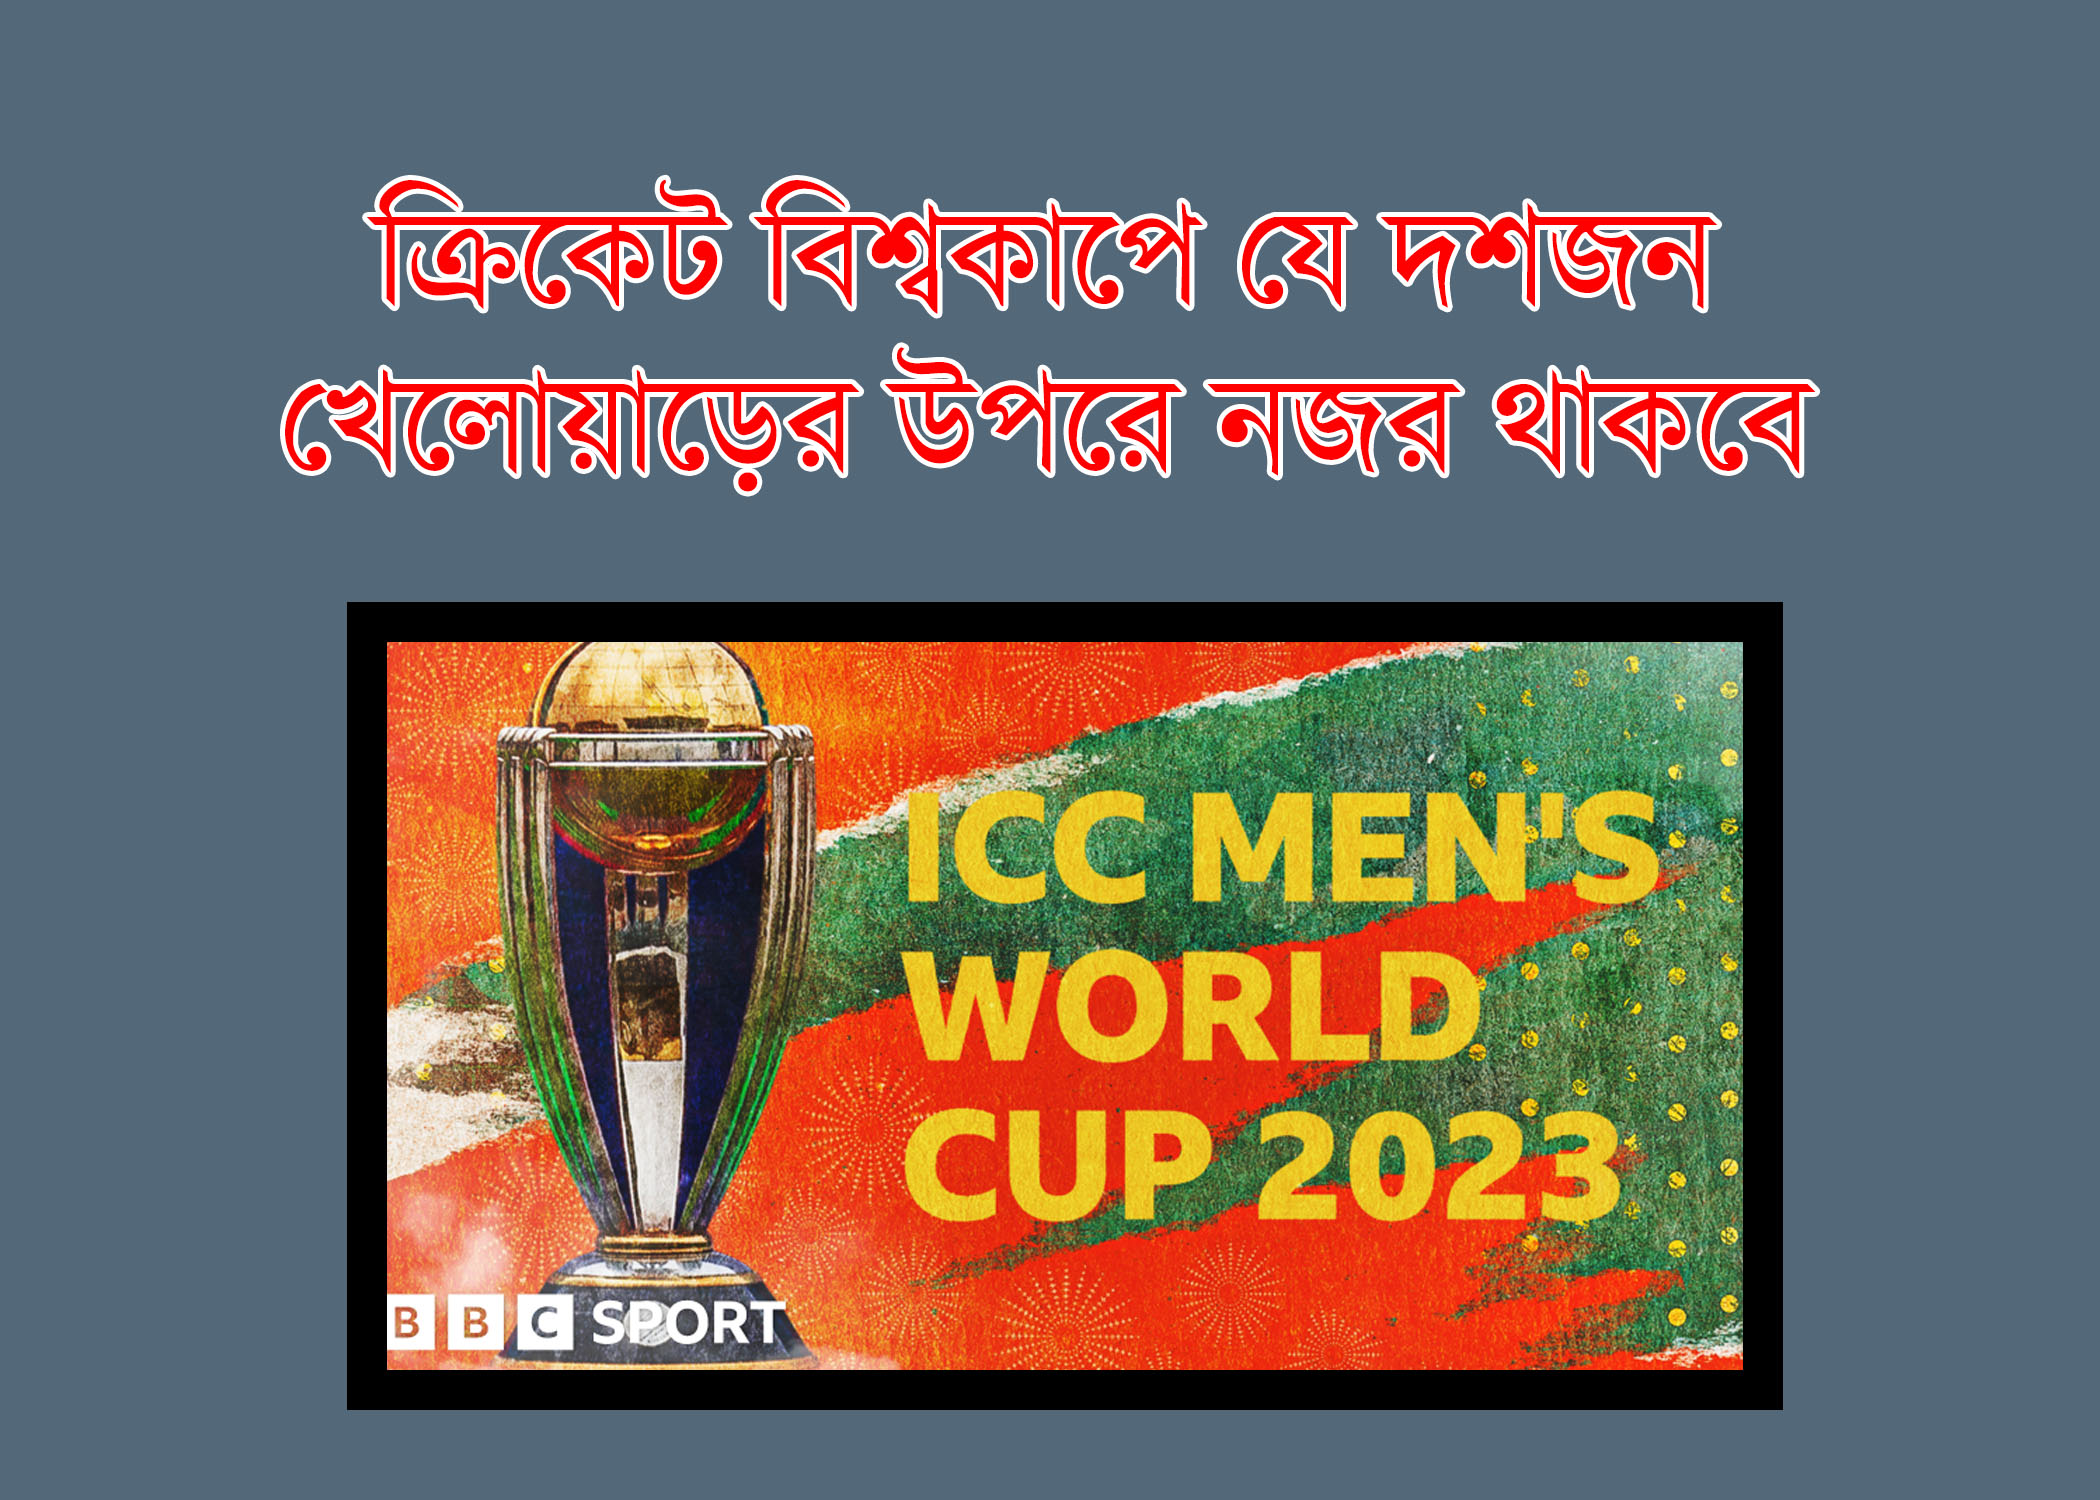 Ten players to watch out for at the 2023 ICC Men’s Cricket World Cup, ক্রিকেট বিশ্বকাপে যে দশজন খেলোয়াড়ের উপরে নজর রাখতে হবে | ২০২৩, icc world cup 2023,world cup 2023,icc cricket world cup 2023,world cup 2023 schedule,match venues for the world cup 2023,odi world cup 2023,cricket world cup 2023 schedule,cricket,icc men's cricket world cup 2023,icc world cup 2023 schedule,top 3 scotland players to watch out in t20 world cup,world cup 2023 cricket,india playing 11 for world cup 2023,world cup 2023 practice match,world cup 2023 warmup match,icc cricket world cup 2023 in india, icccwc2023,cricket,indiancricket,cricket highlights,ind vs pak,ind vs nz,ind vs aus,ind vs eng,ind vs ned,ind vs sa,ind vs afg,ind vs ban,world cup,virat kohli,virat kohli batting,bowling,match highlights,rohit sharma,mitchell starc,cricbuzz,sports,video,highlights,ipl,india,pakistan,match,t20 world cup,t20,news,live,streaming,scores,icc,watchout,players,legend,top,viral,australia,new zealand,south africa, ক্রিকেট,বাংলাদেশ ক্রিকেট,ভক্তরা যে ৫ তারকার উপর বিশেষ নজর থাকবে,ক্রিকেট নিউজ,ক্রিকেটের খবর,যে ৫ জন বোলার হতে পারেন ২০১৯ বিশ্বকাপের সর্বোচ্চ উইকেট শিকারী,টি-টোয়েন্টি বিশ্বকাপের ফটো সেশন,টি-টোয়েন্টি বিশ্বকাপের সময়সূচি,টি-টোয়েন্টি বিশ্বকাপে স্কোয়াড ঘোষণা করল বাংলাদেশ,বিশ্বকাপের খবর,রাশিয়া বিশ্বকাপ,২০১৯ বিশ্বকাপের সর্বোচ্চ উইকেট শিকারী,ক্রিকেট খেলার খবর,বিশ্বকাপে বাংলাদেশের প্রস্তুতি,বিশ্বকাপ ফুটবল,রাশিয়া বিশ্বকাপ ২০১৮